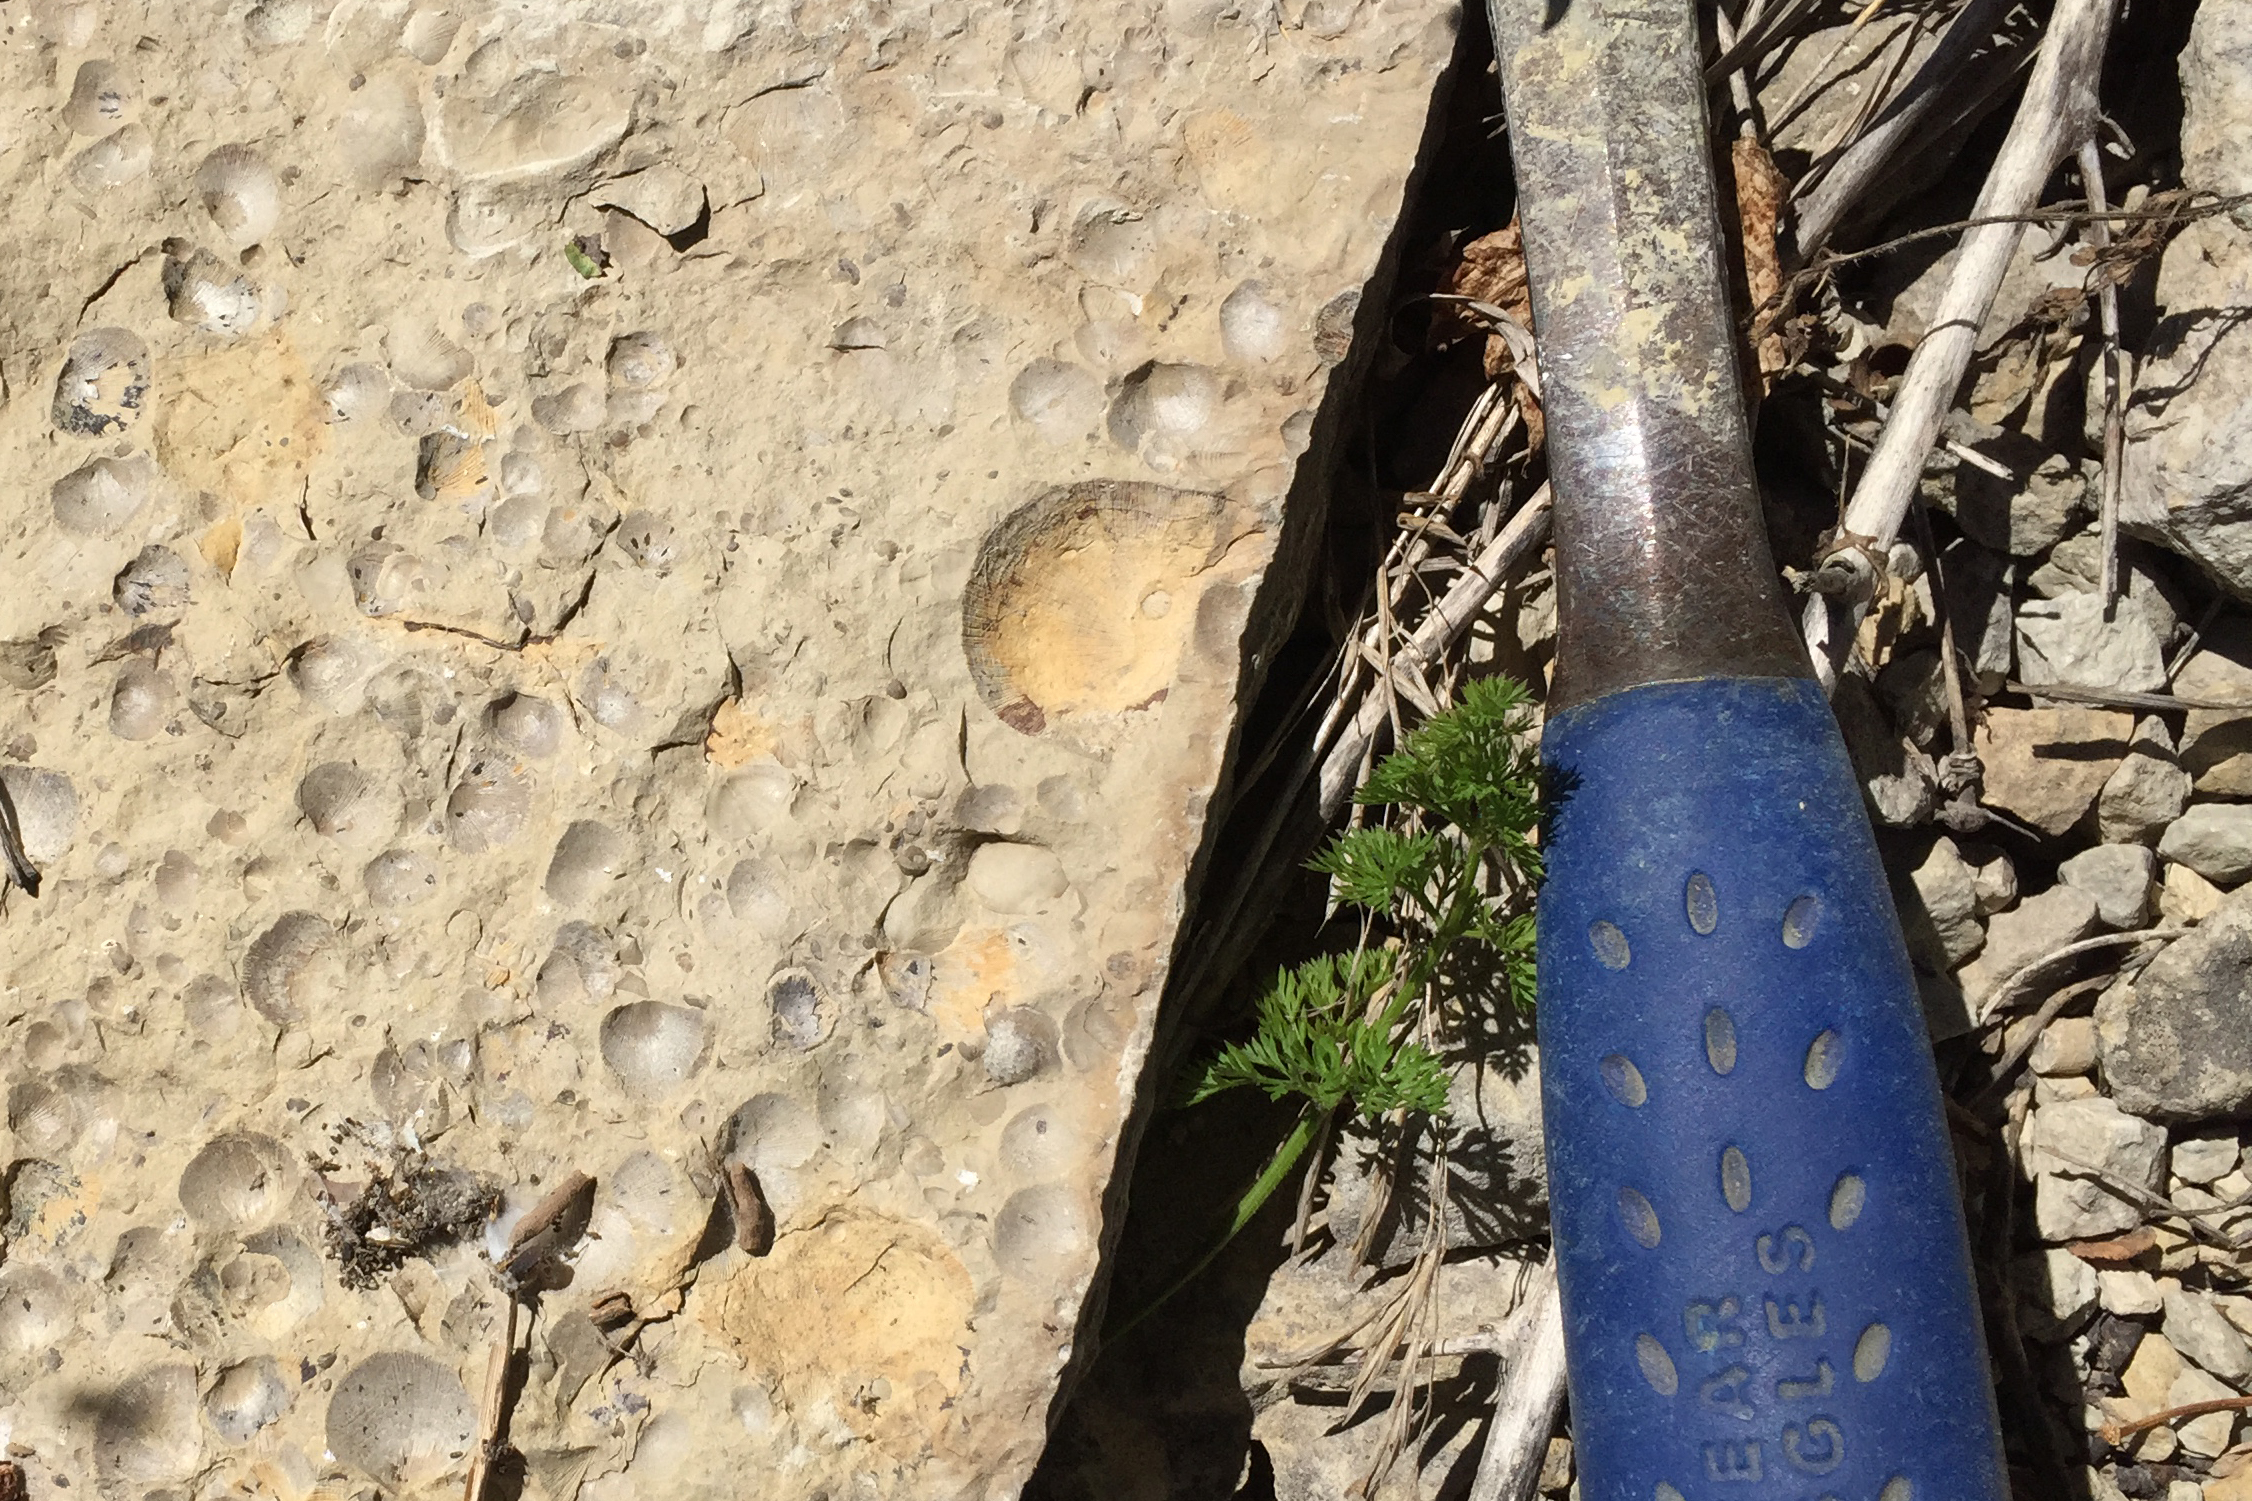 Fossil molds of several brachiopods in Ordovician bedrock in southeastern Minnesota.